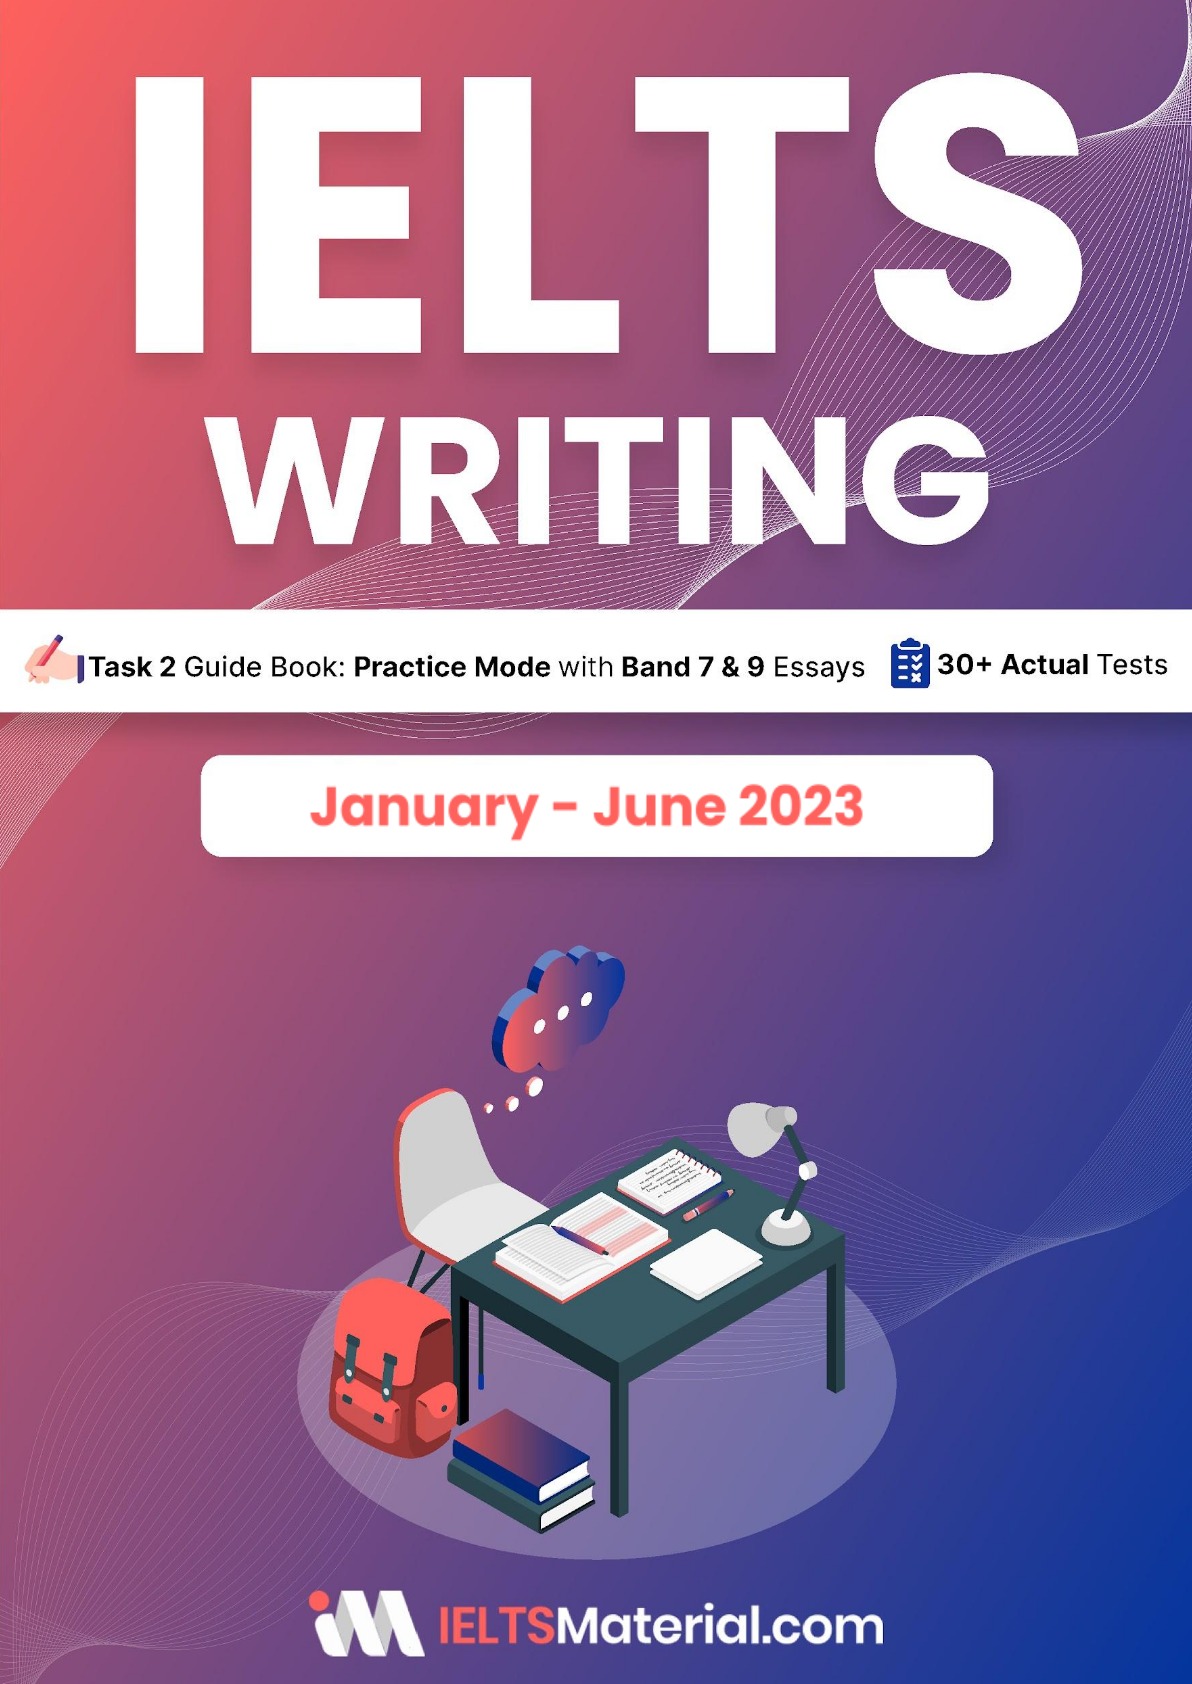 IELTS (Academic) Writing Actual Tests eBook Combo (January – June 2023) [Task 1+ Task 2]